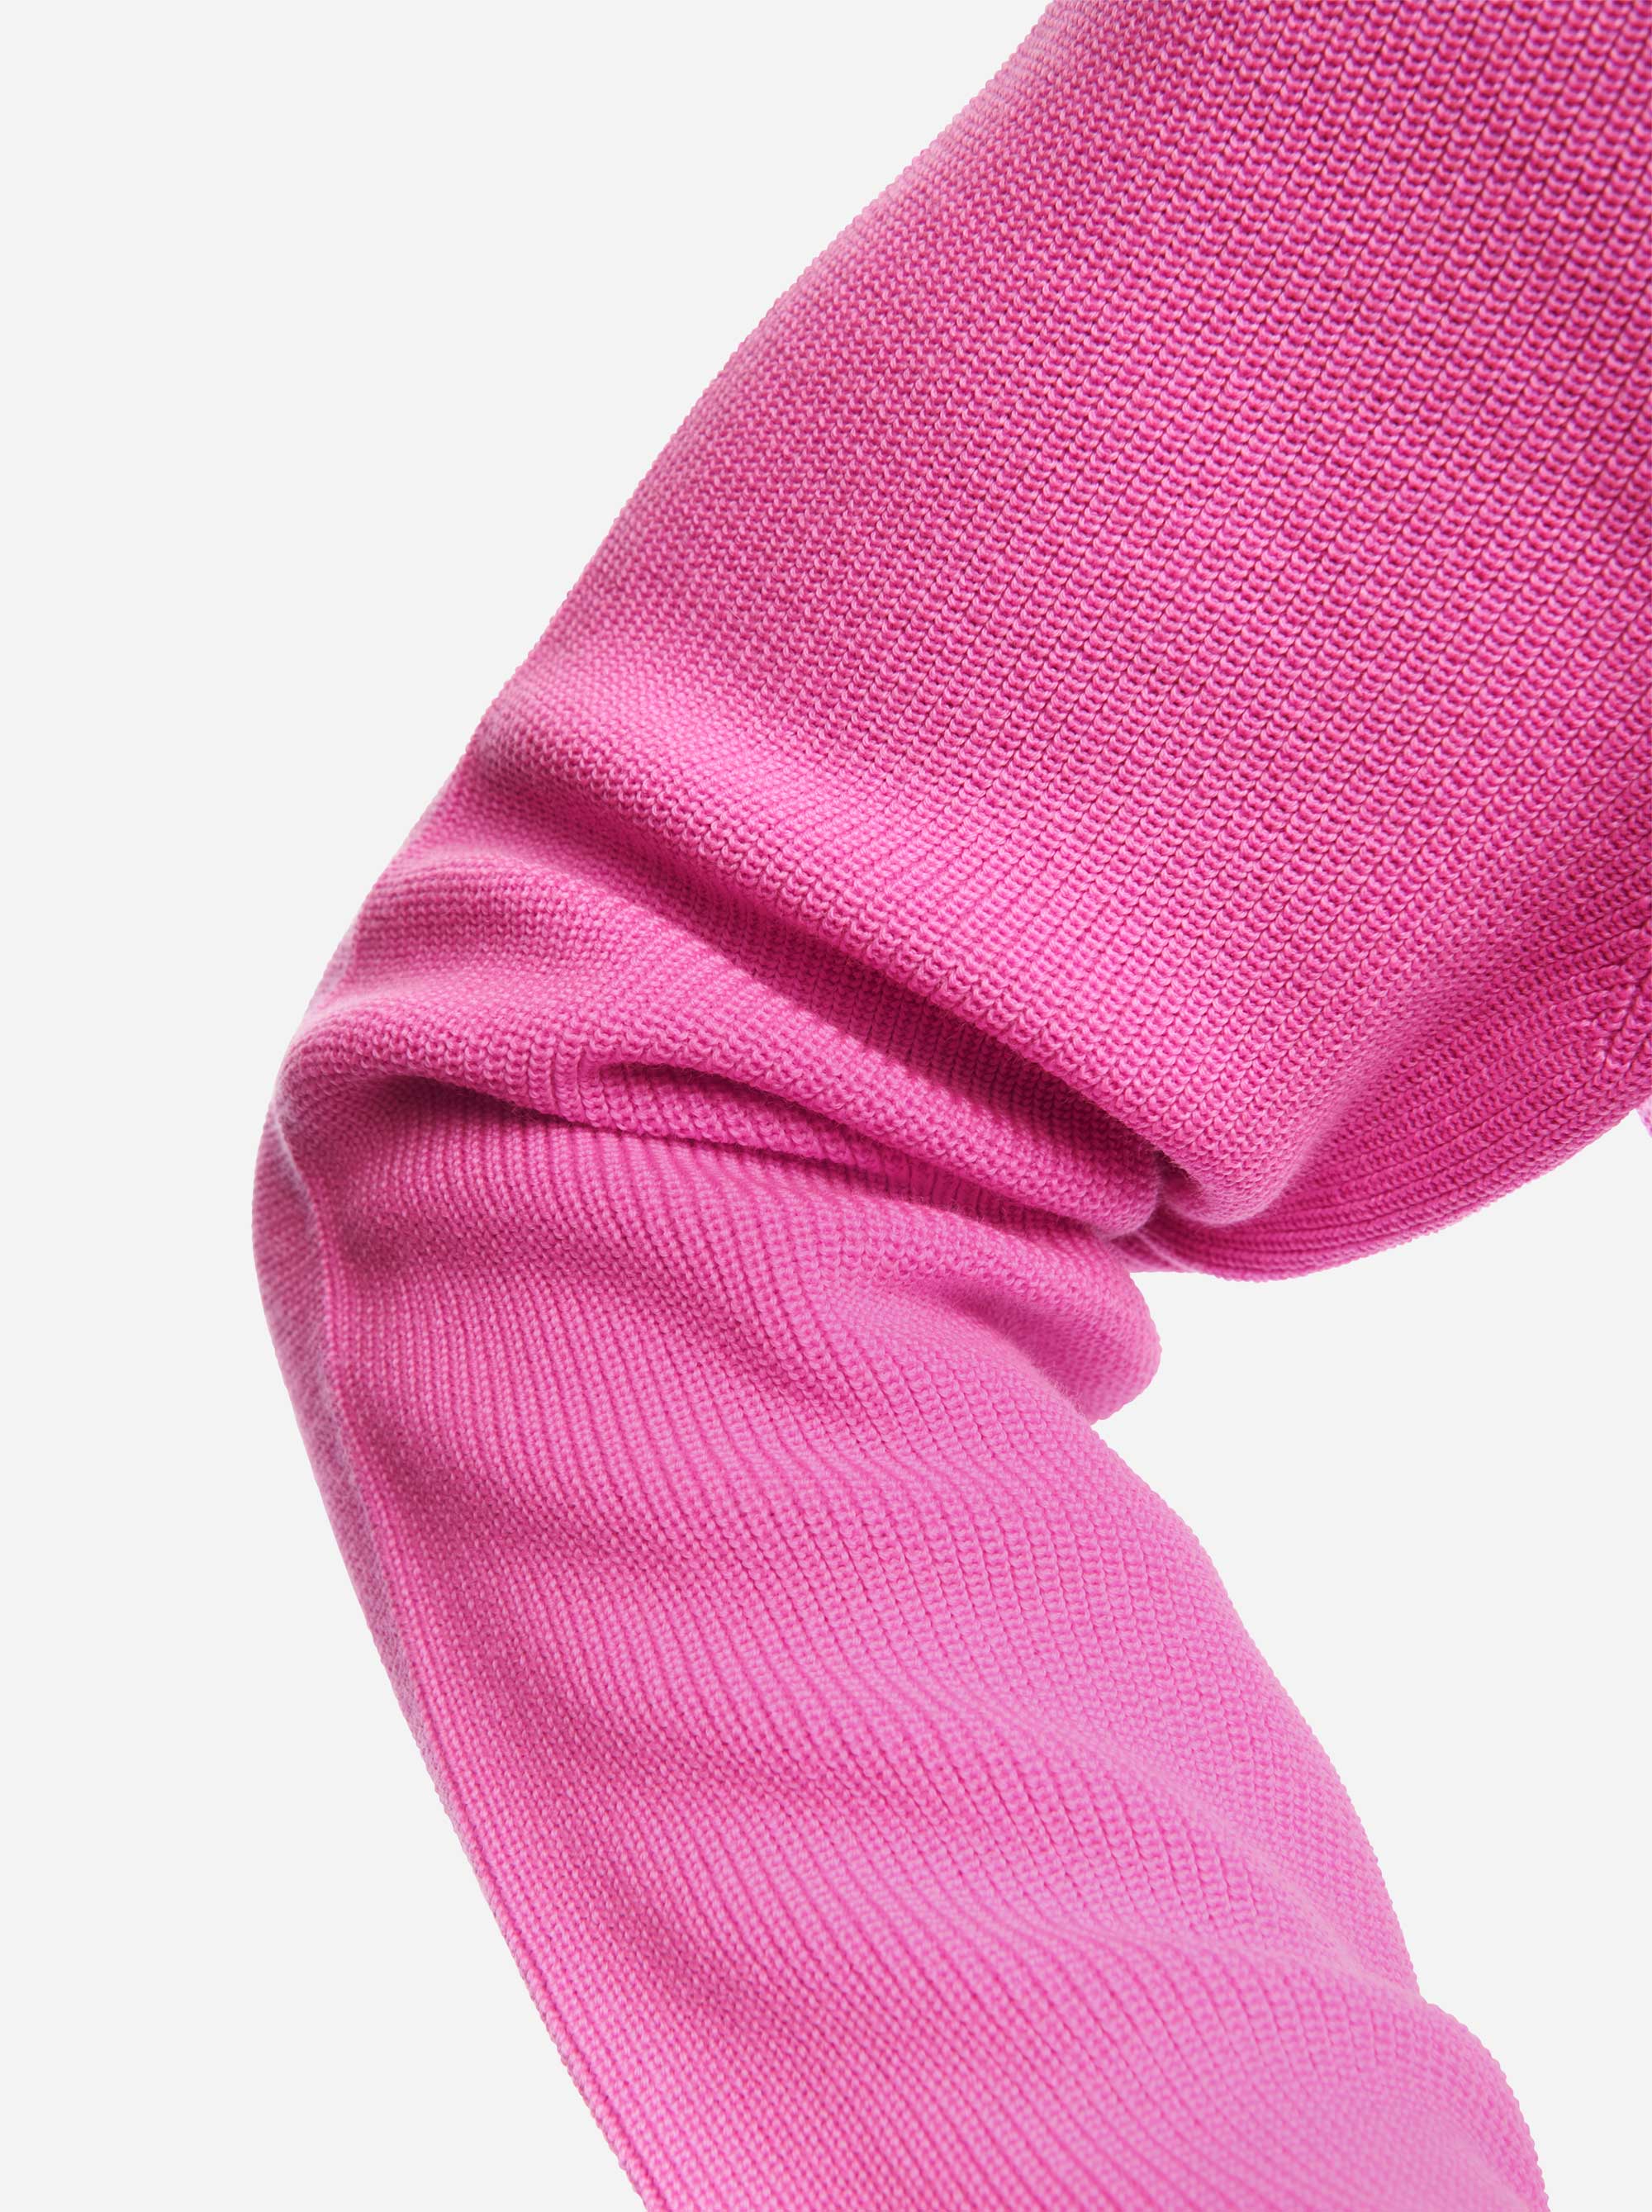 Teym - The Merino Sweater - Crewneck - Men - Bright Pink - 6